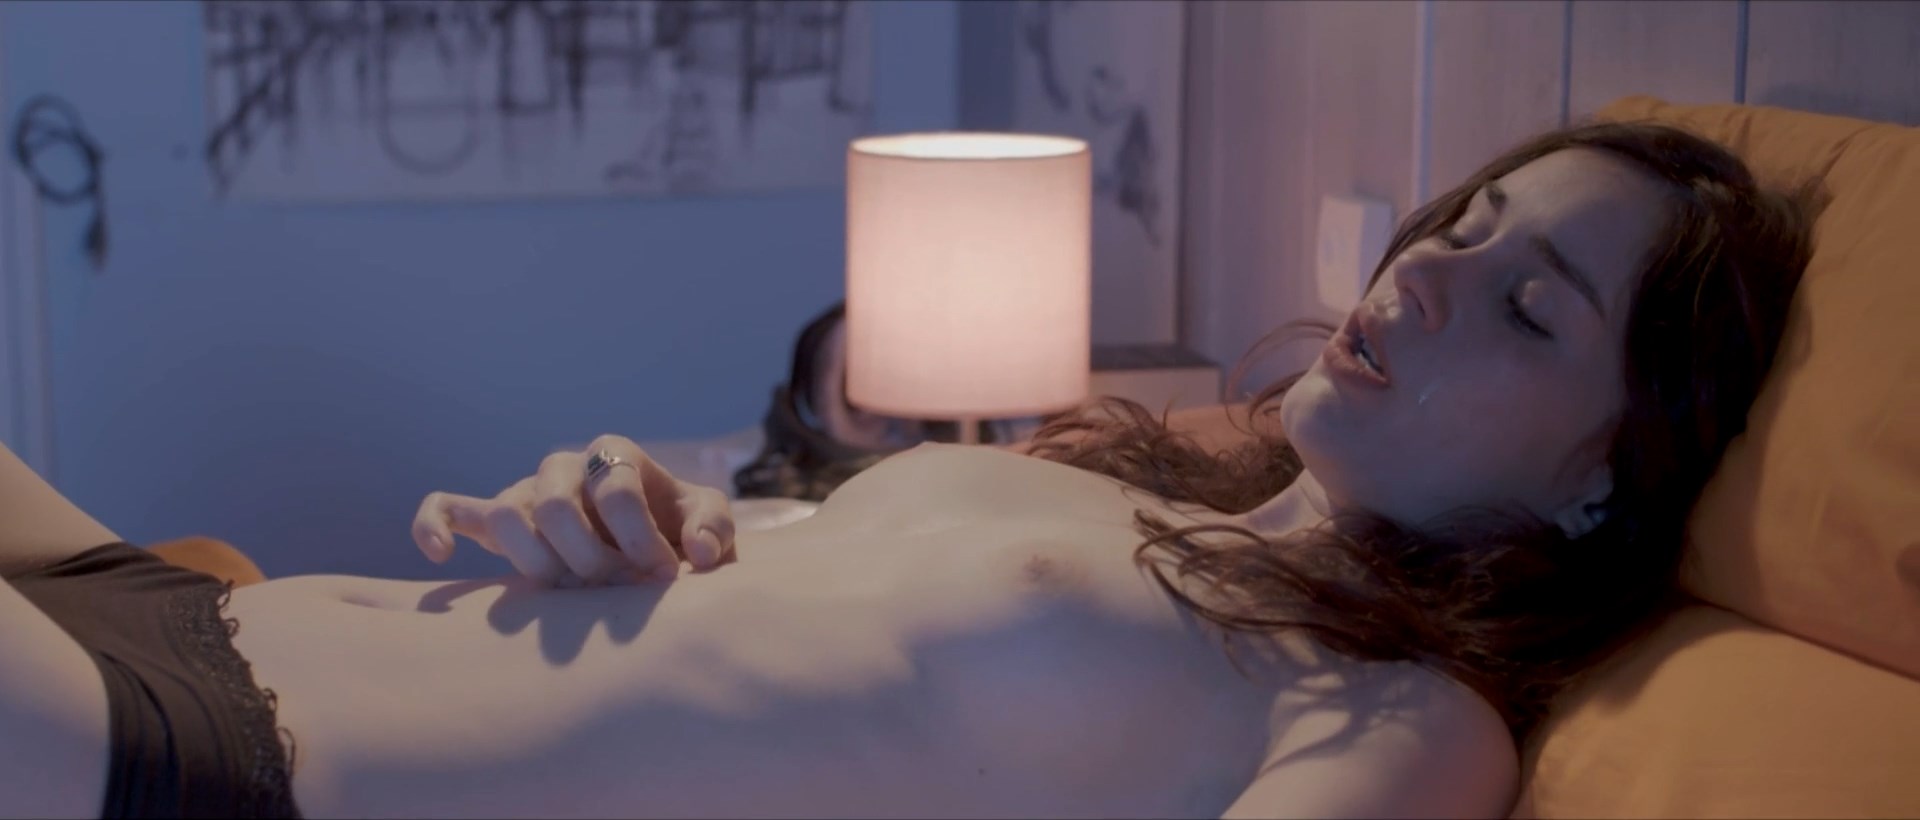 Nude Video Celebs Juliette Pi Nude Margaux 2017